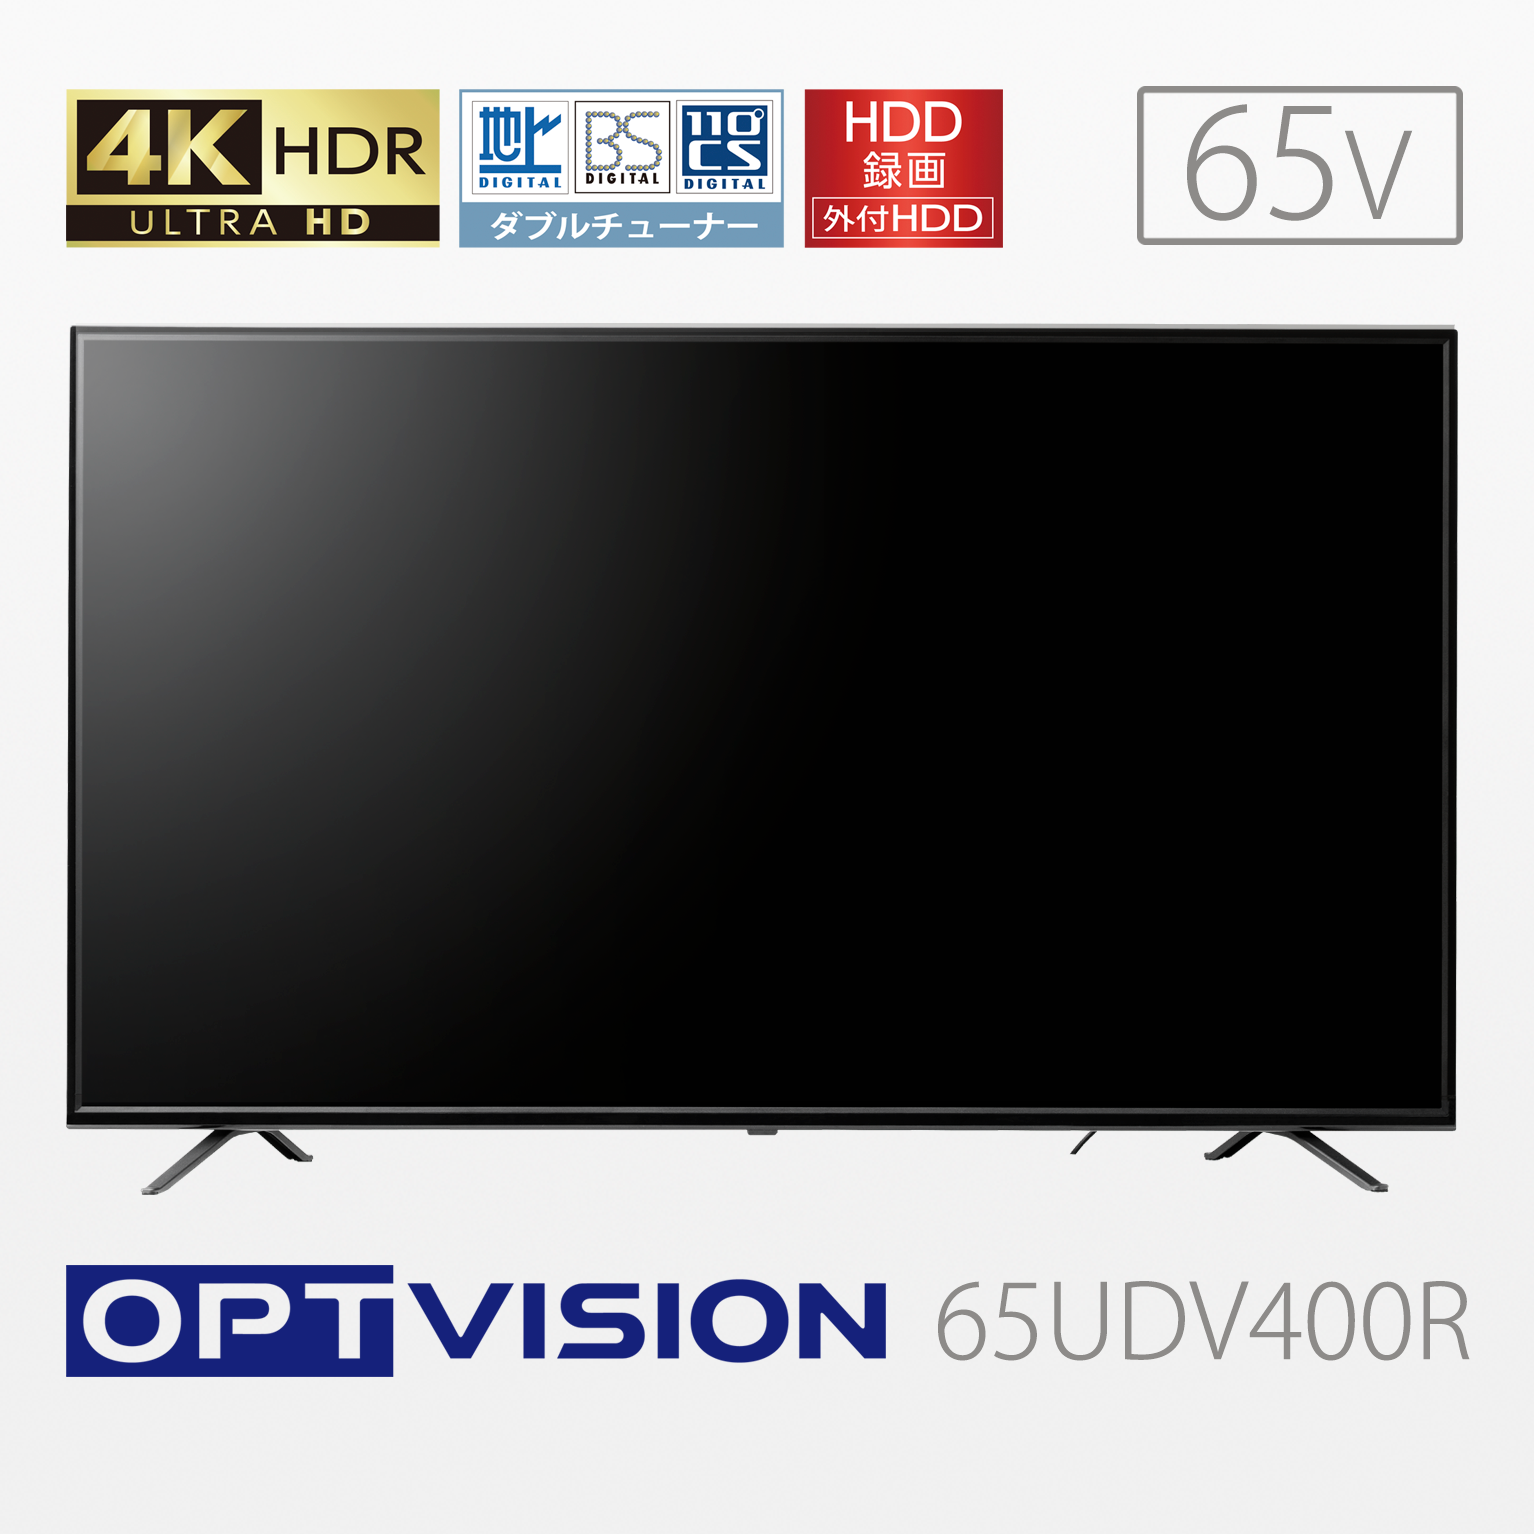 'OPTVISION 65v型 HDR対応4K液晶テレビ 65UDV400R（3年間延長保証なし）'